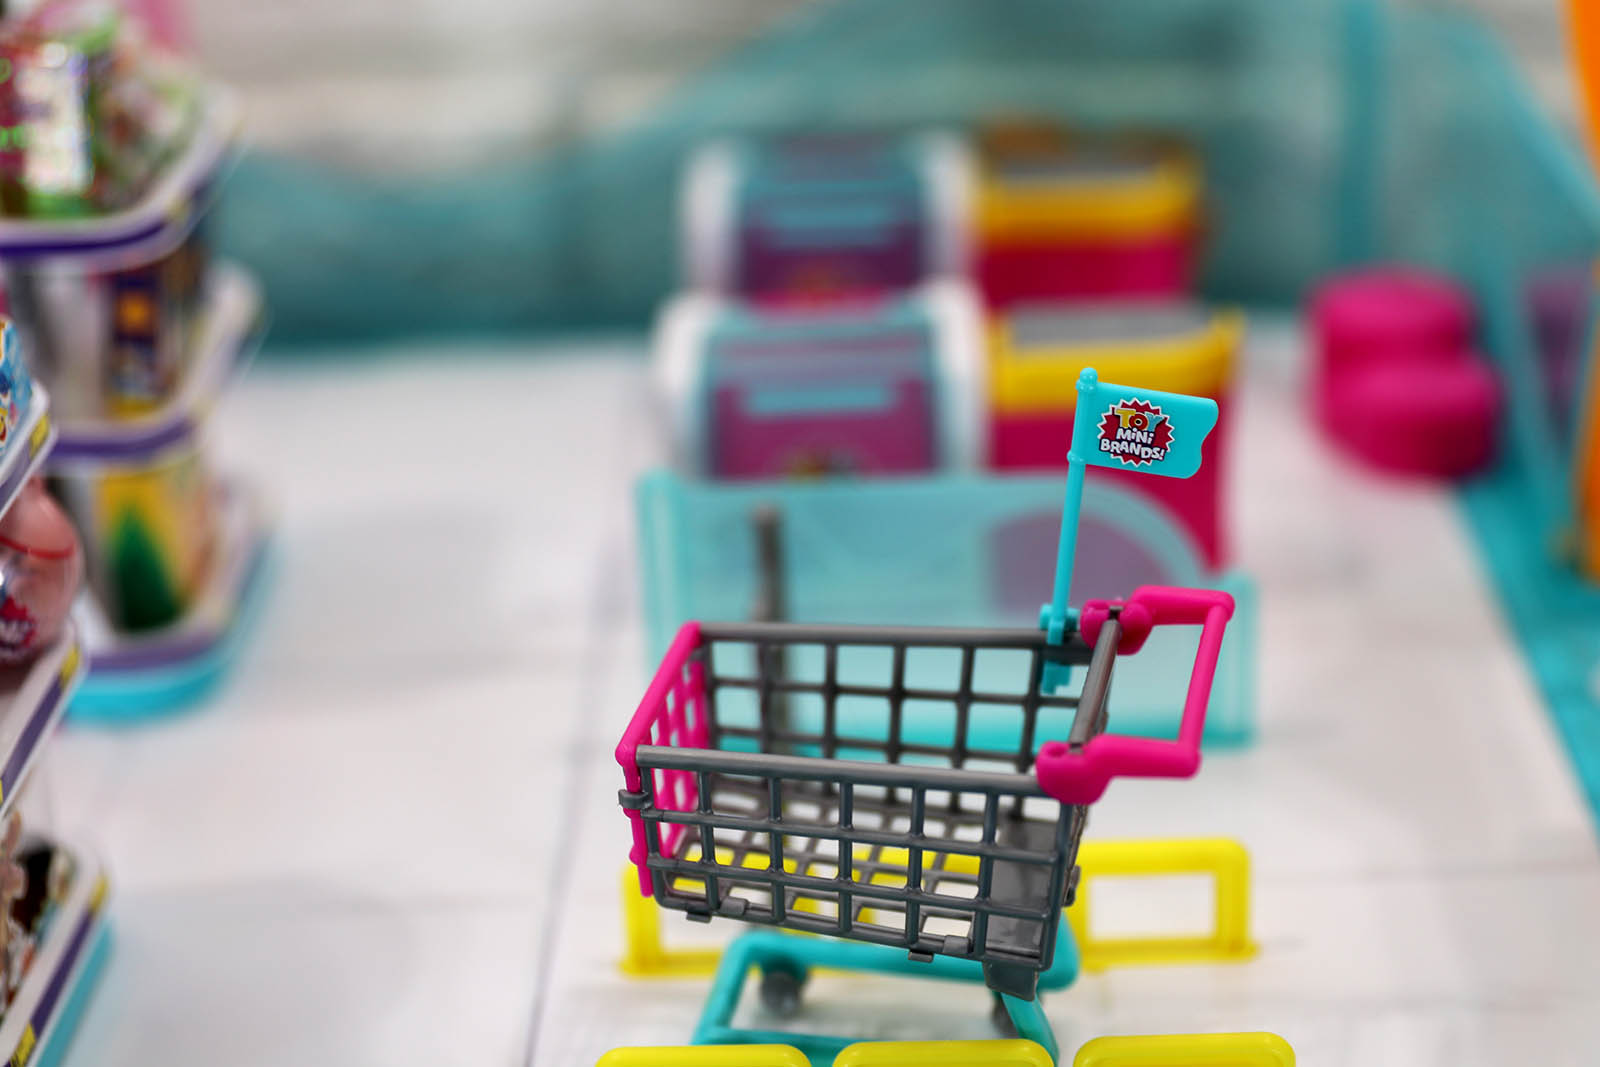 5 Surprise Toy Mini Brands Mini Toy Shop Playset